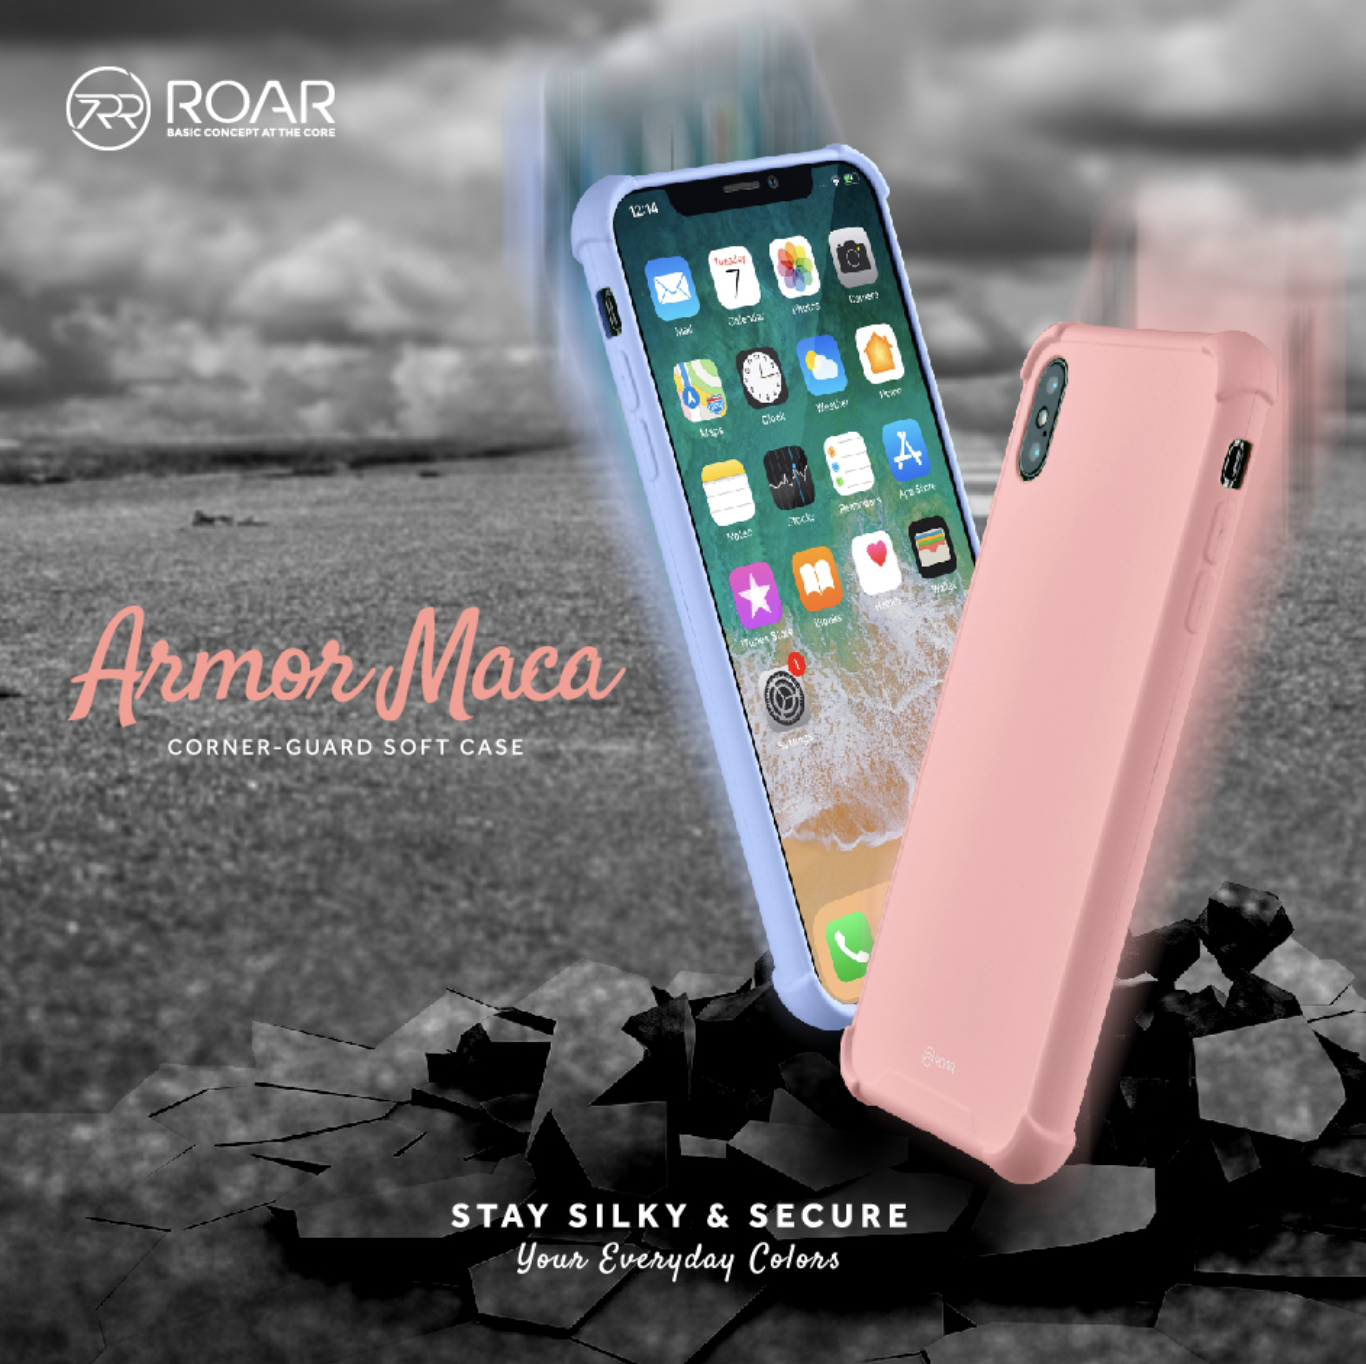 Roar Armor Maca, iPhone 7/8 [MOQ of 5]